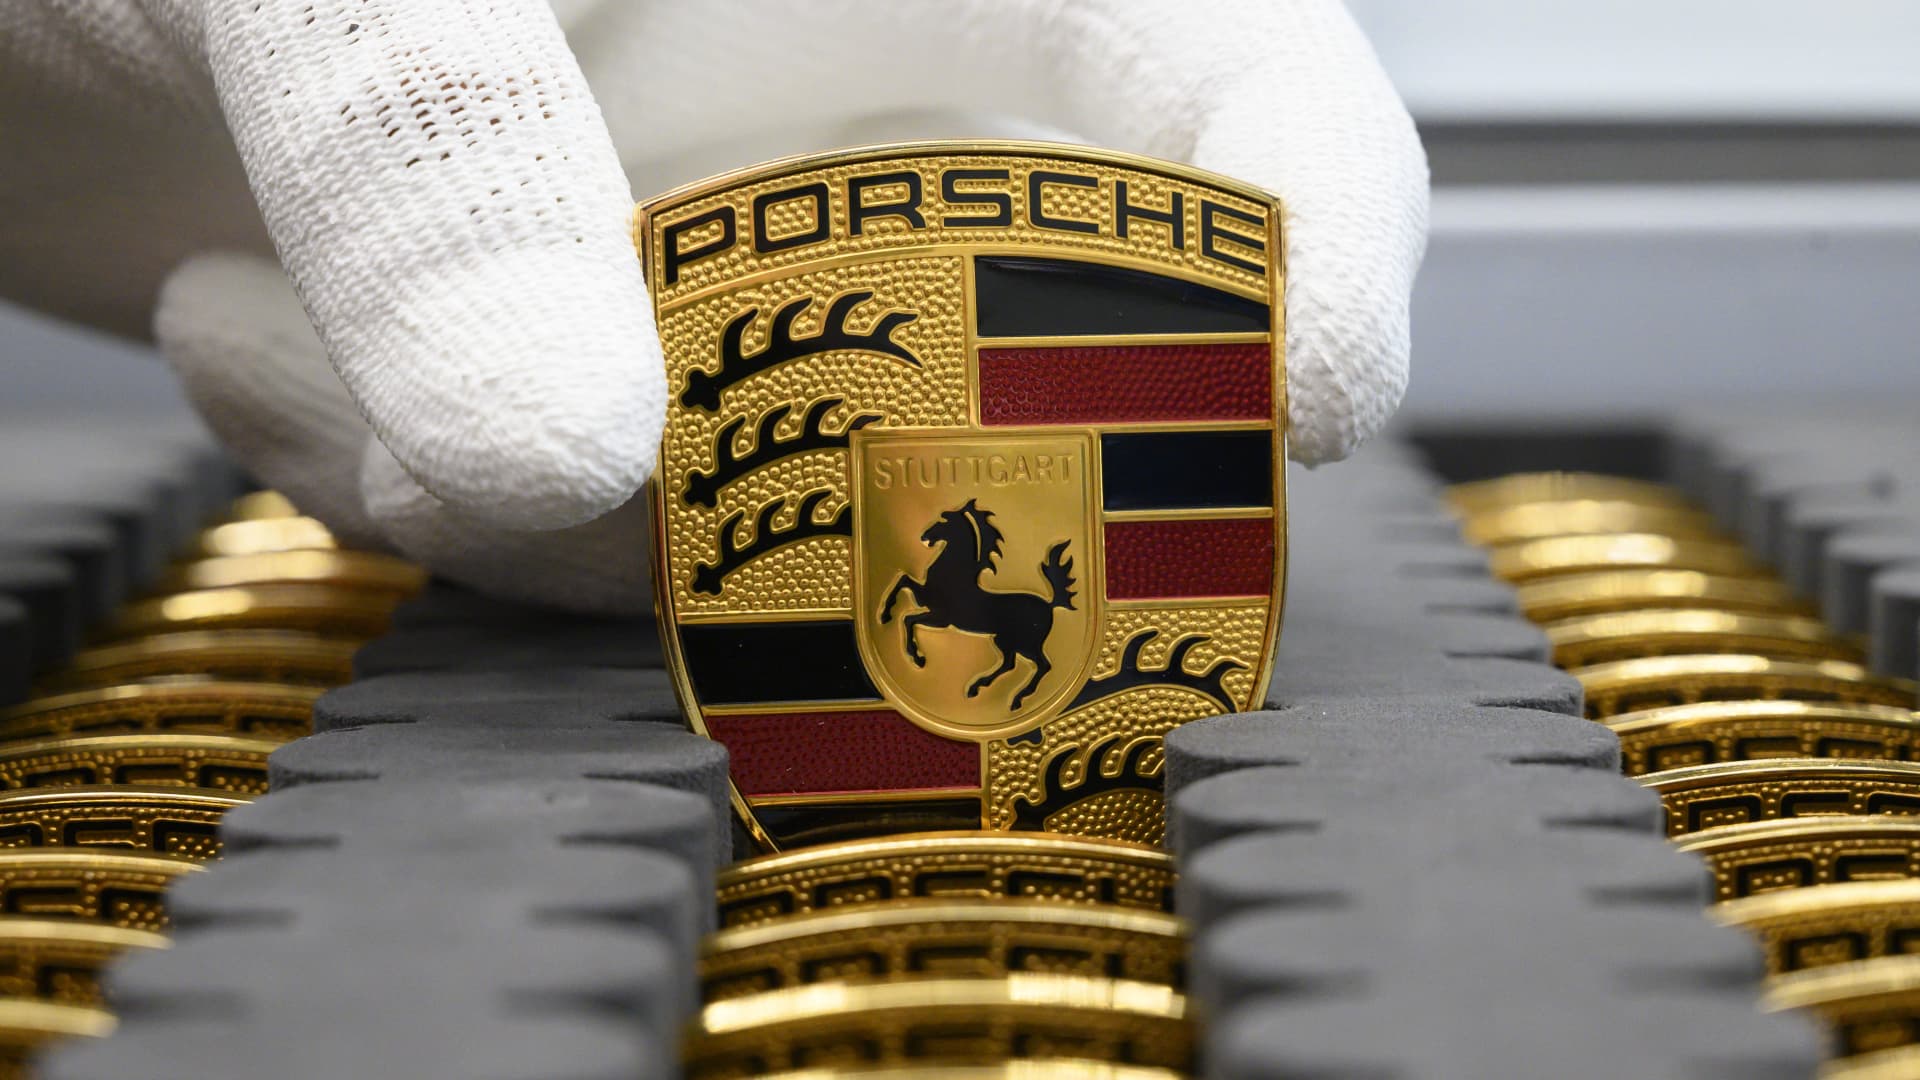 Porsche shares rise in Frankfurt market debut